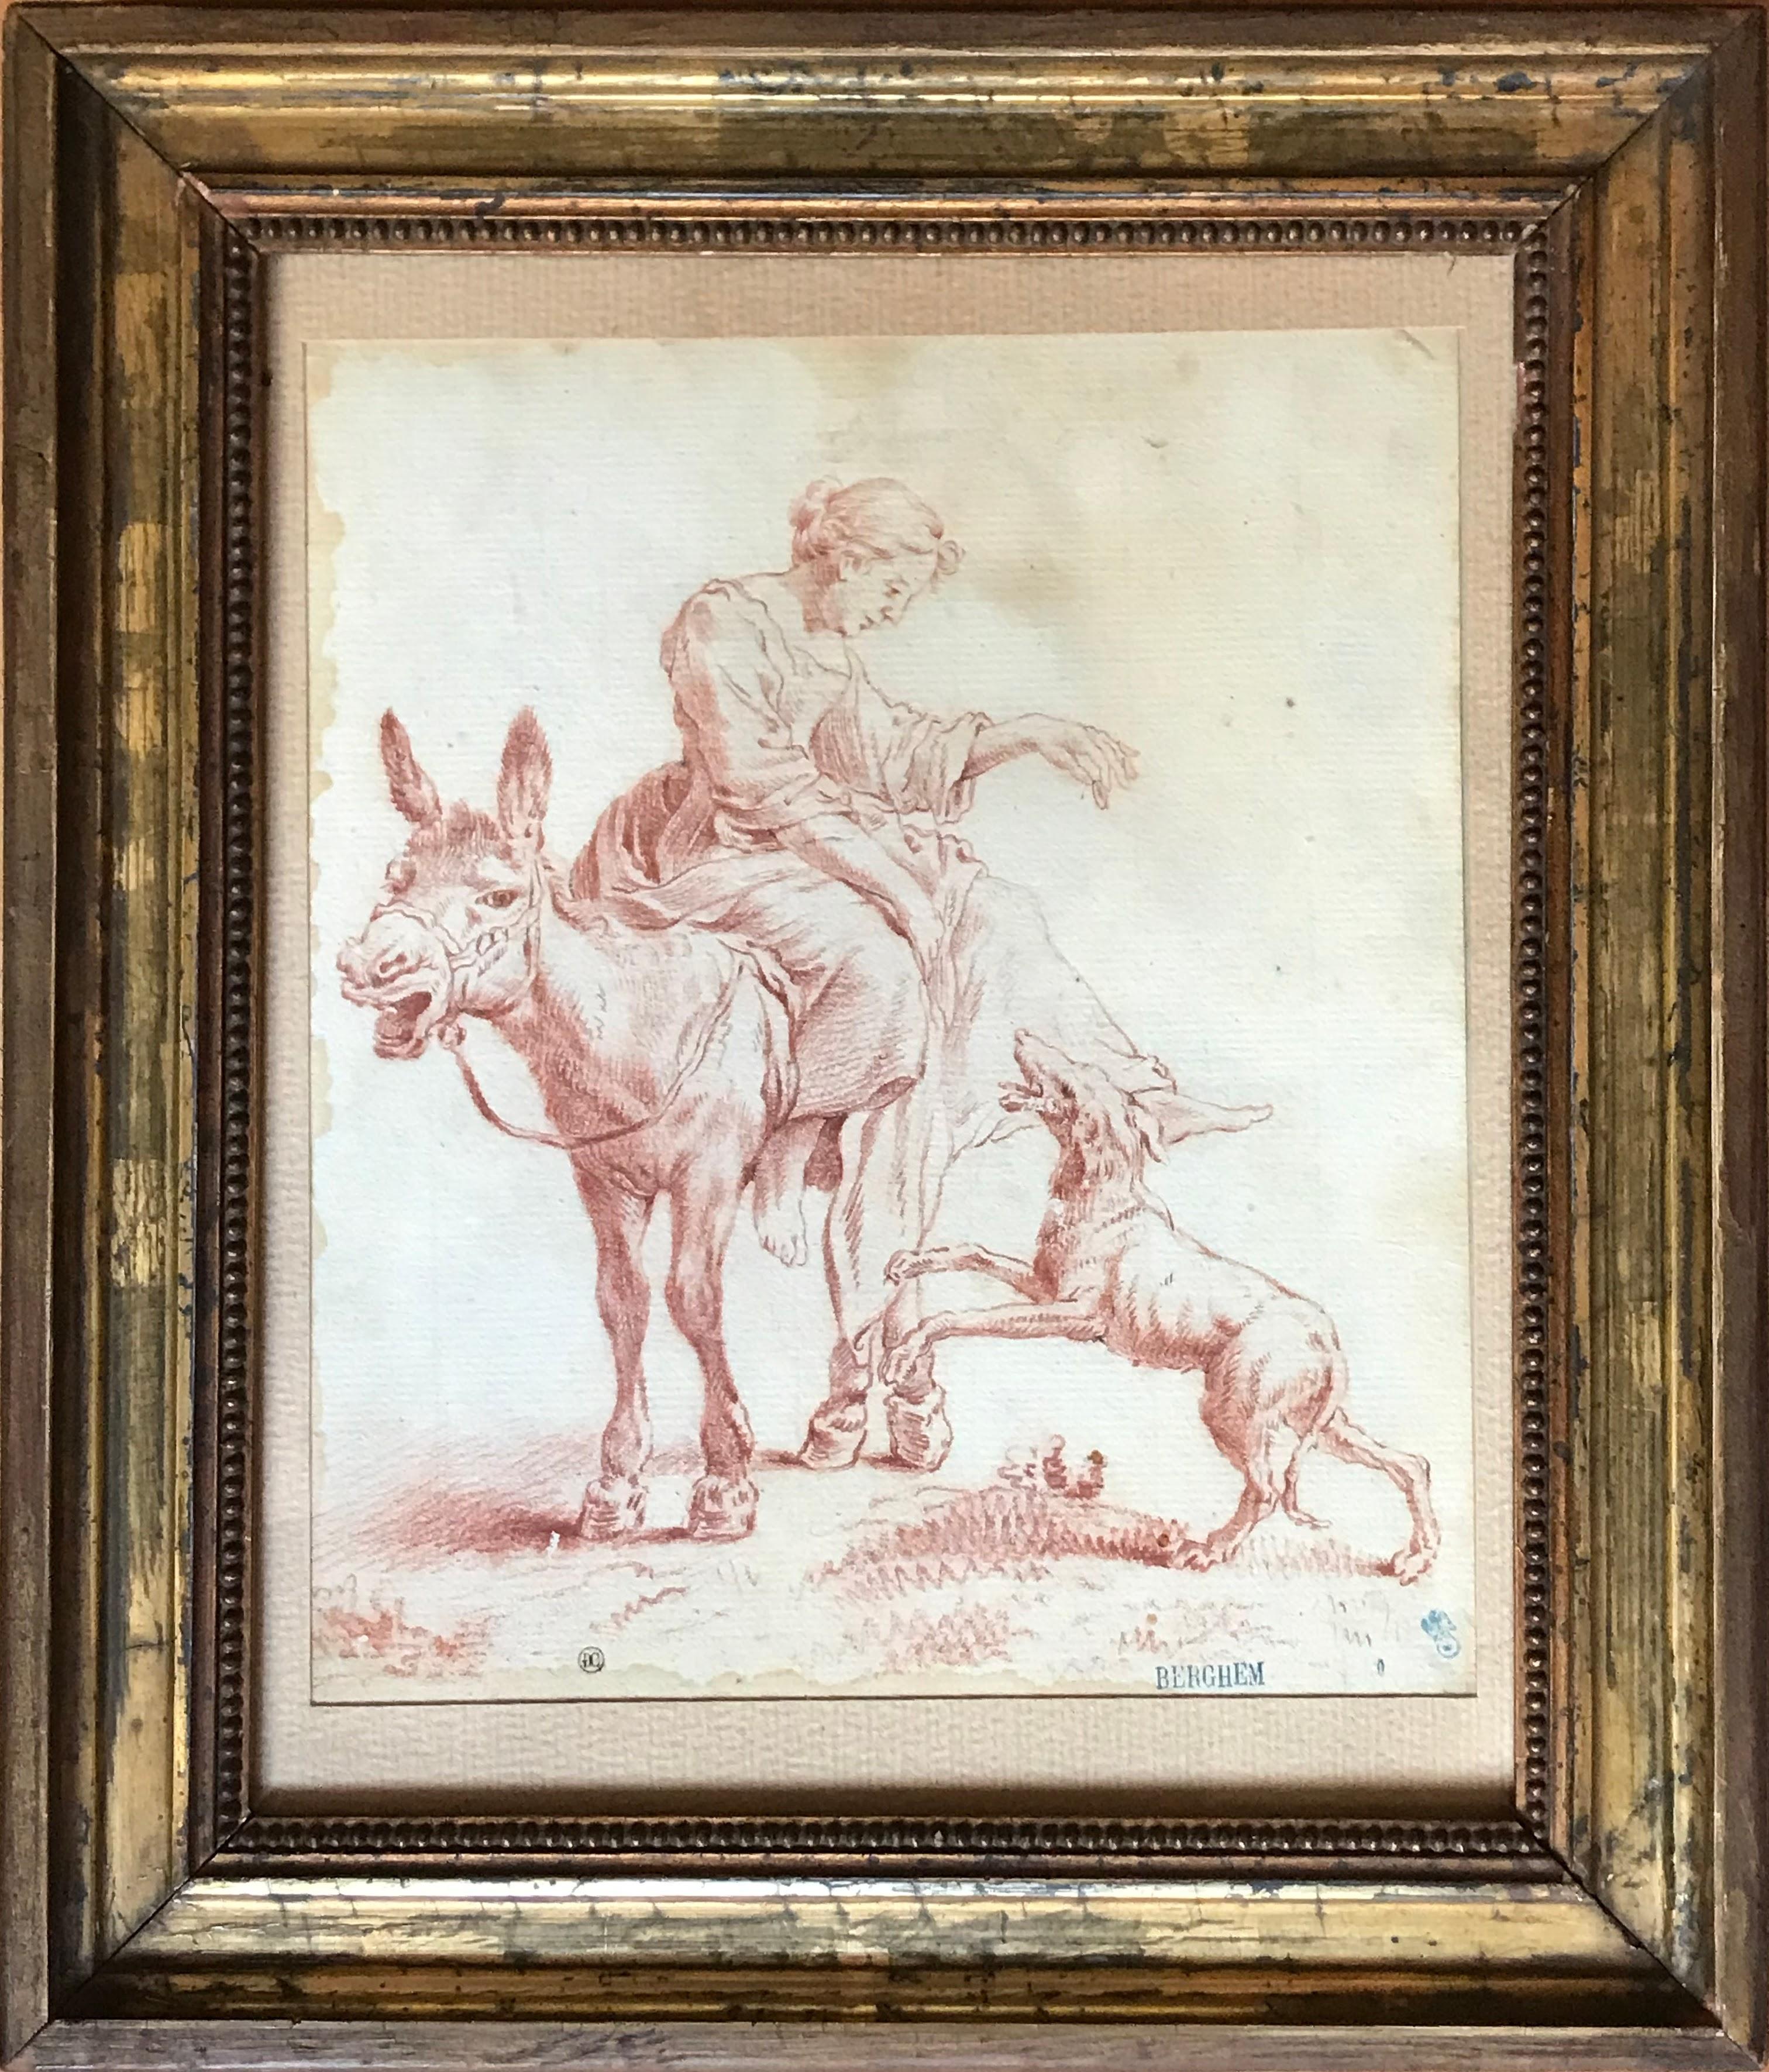 Sanguine drawing "Shepherdess on a Donkey" by Nicolaes Berchem